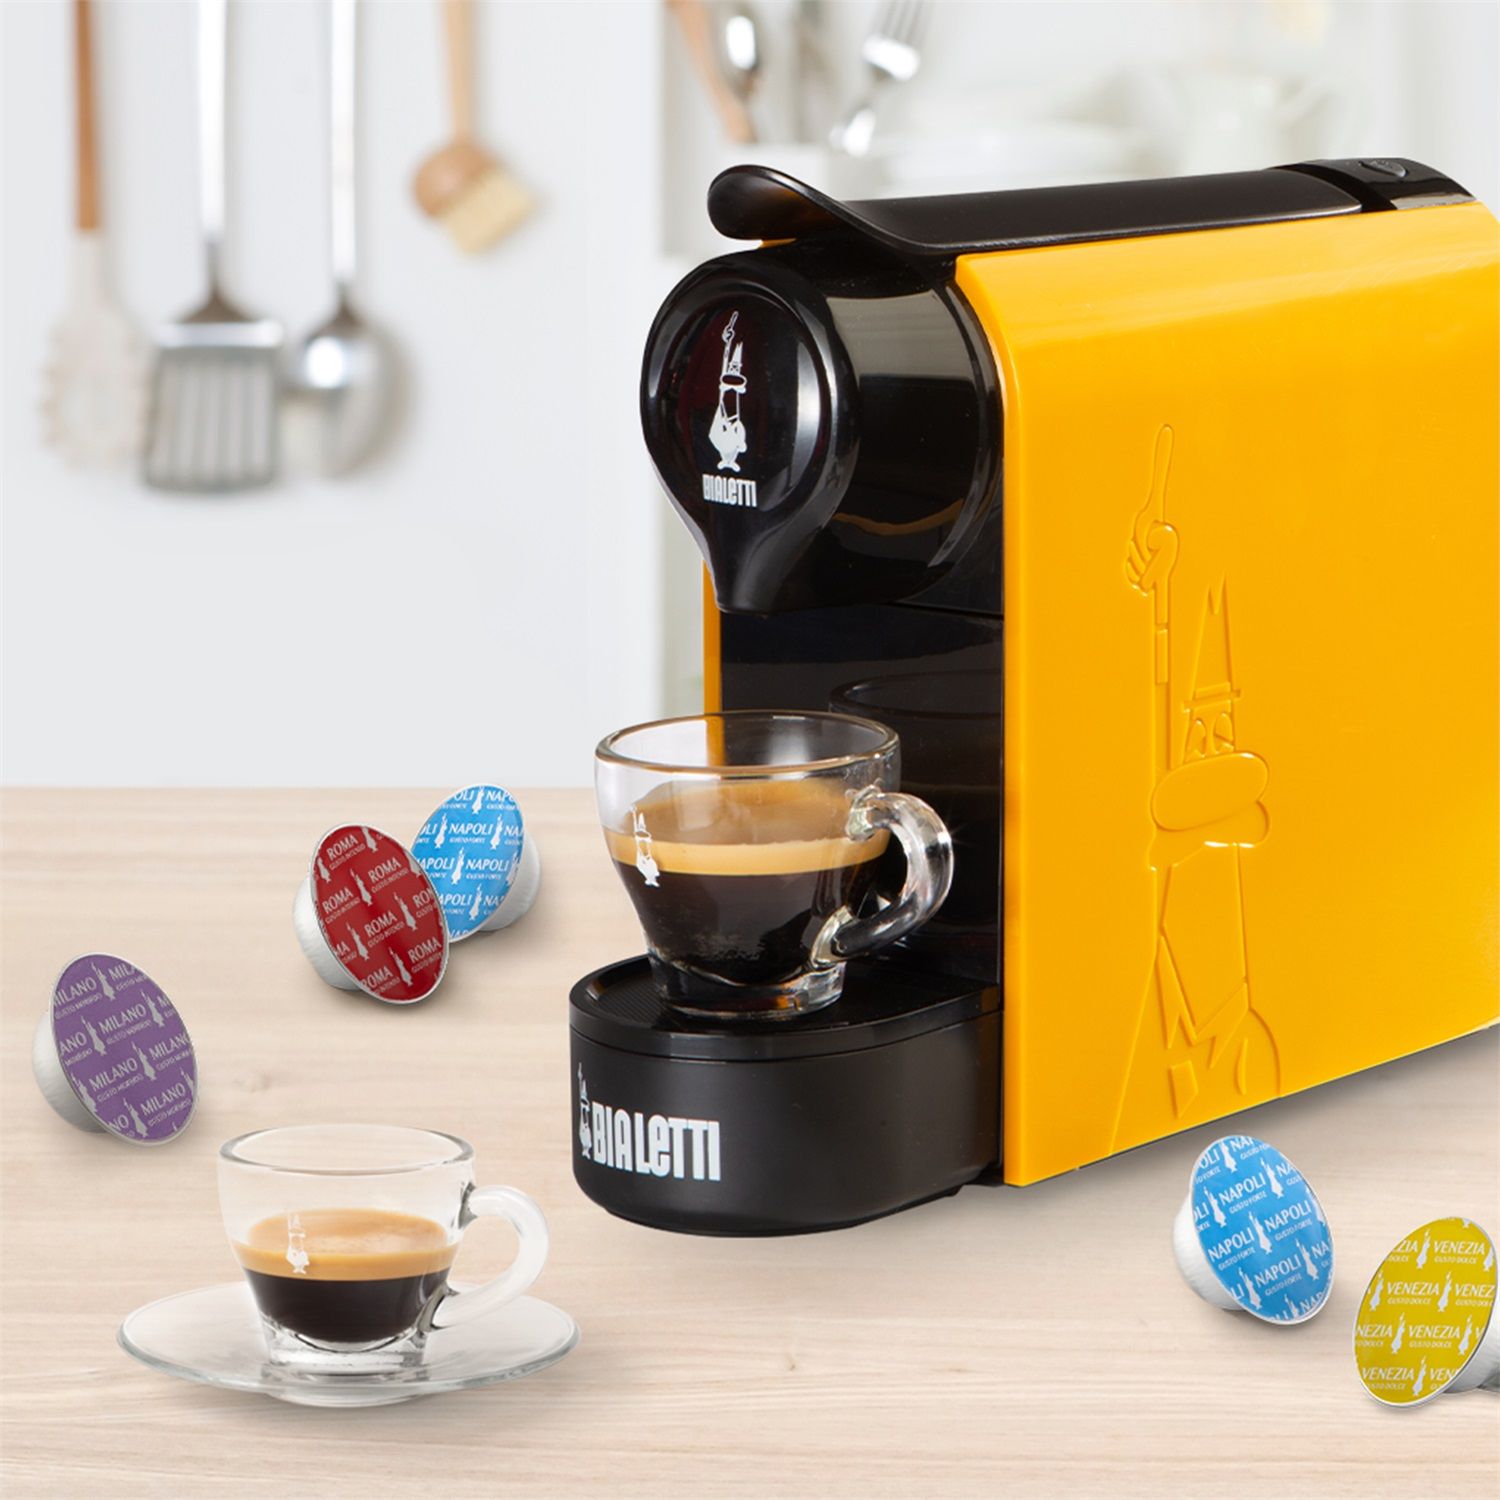 Bialetti Macchina Caffe' Espresso Smart a Capsule Colore Bianco